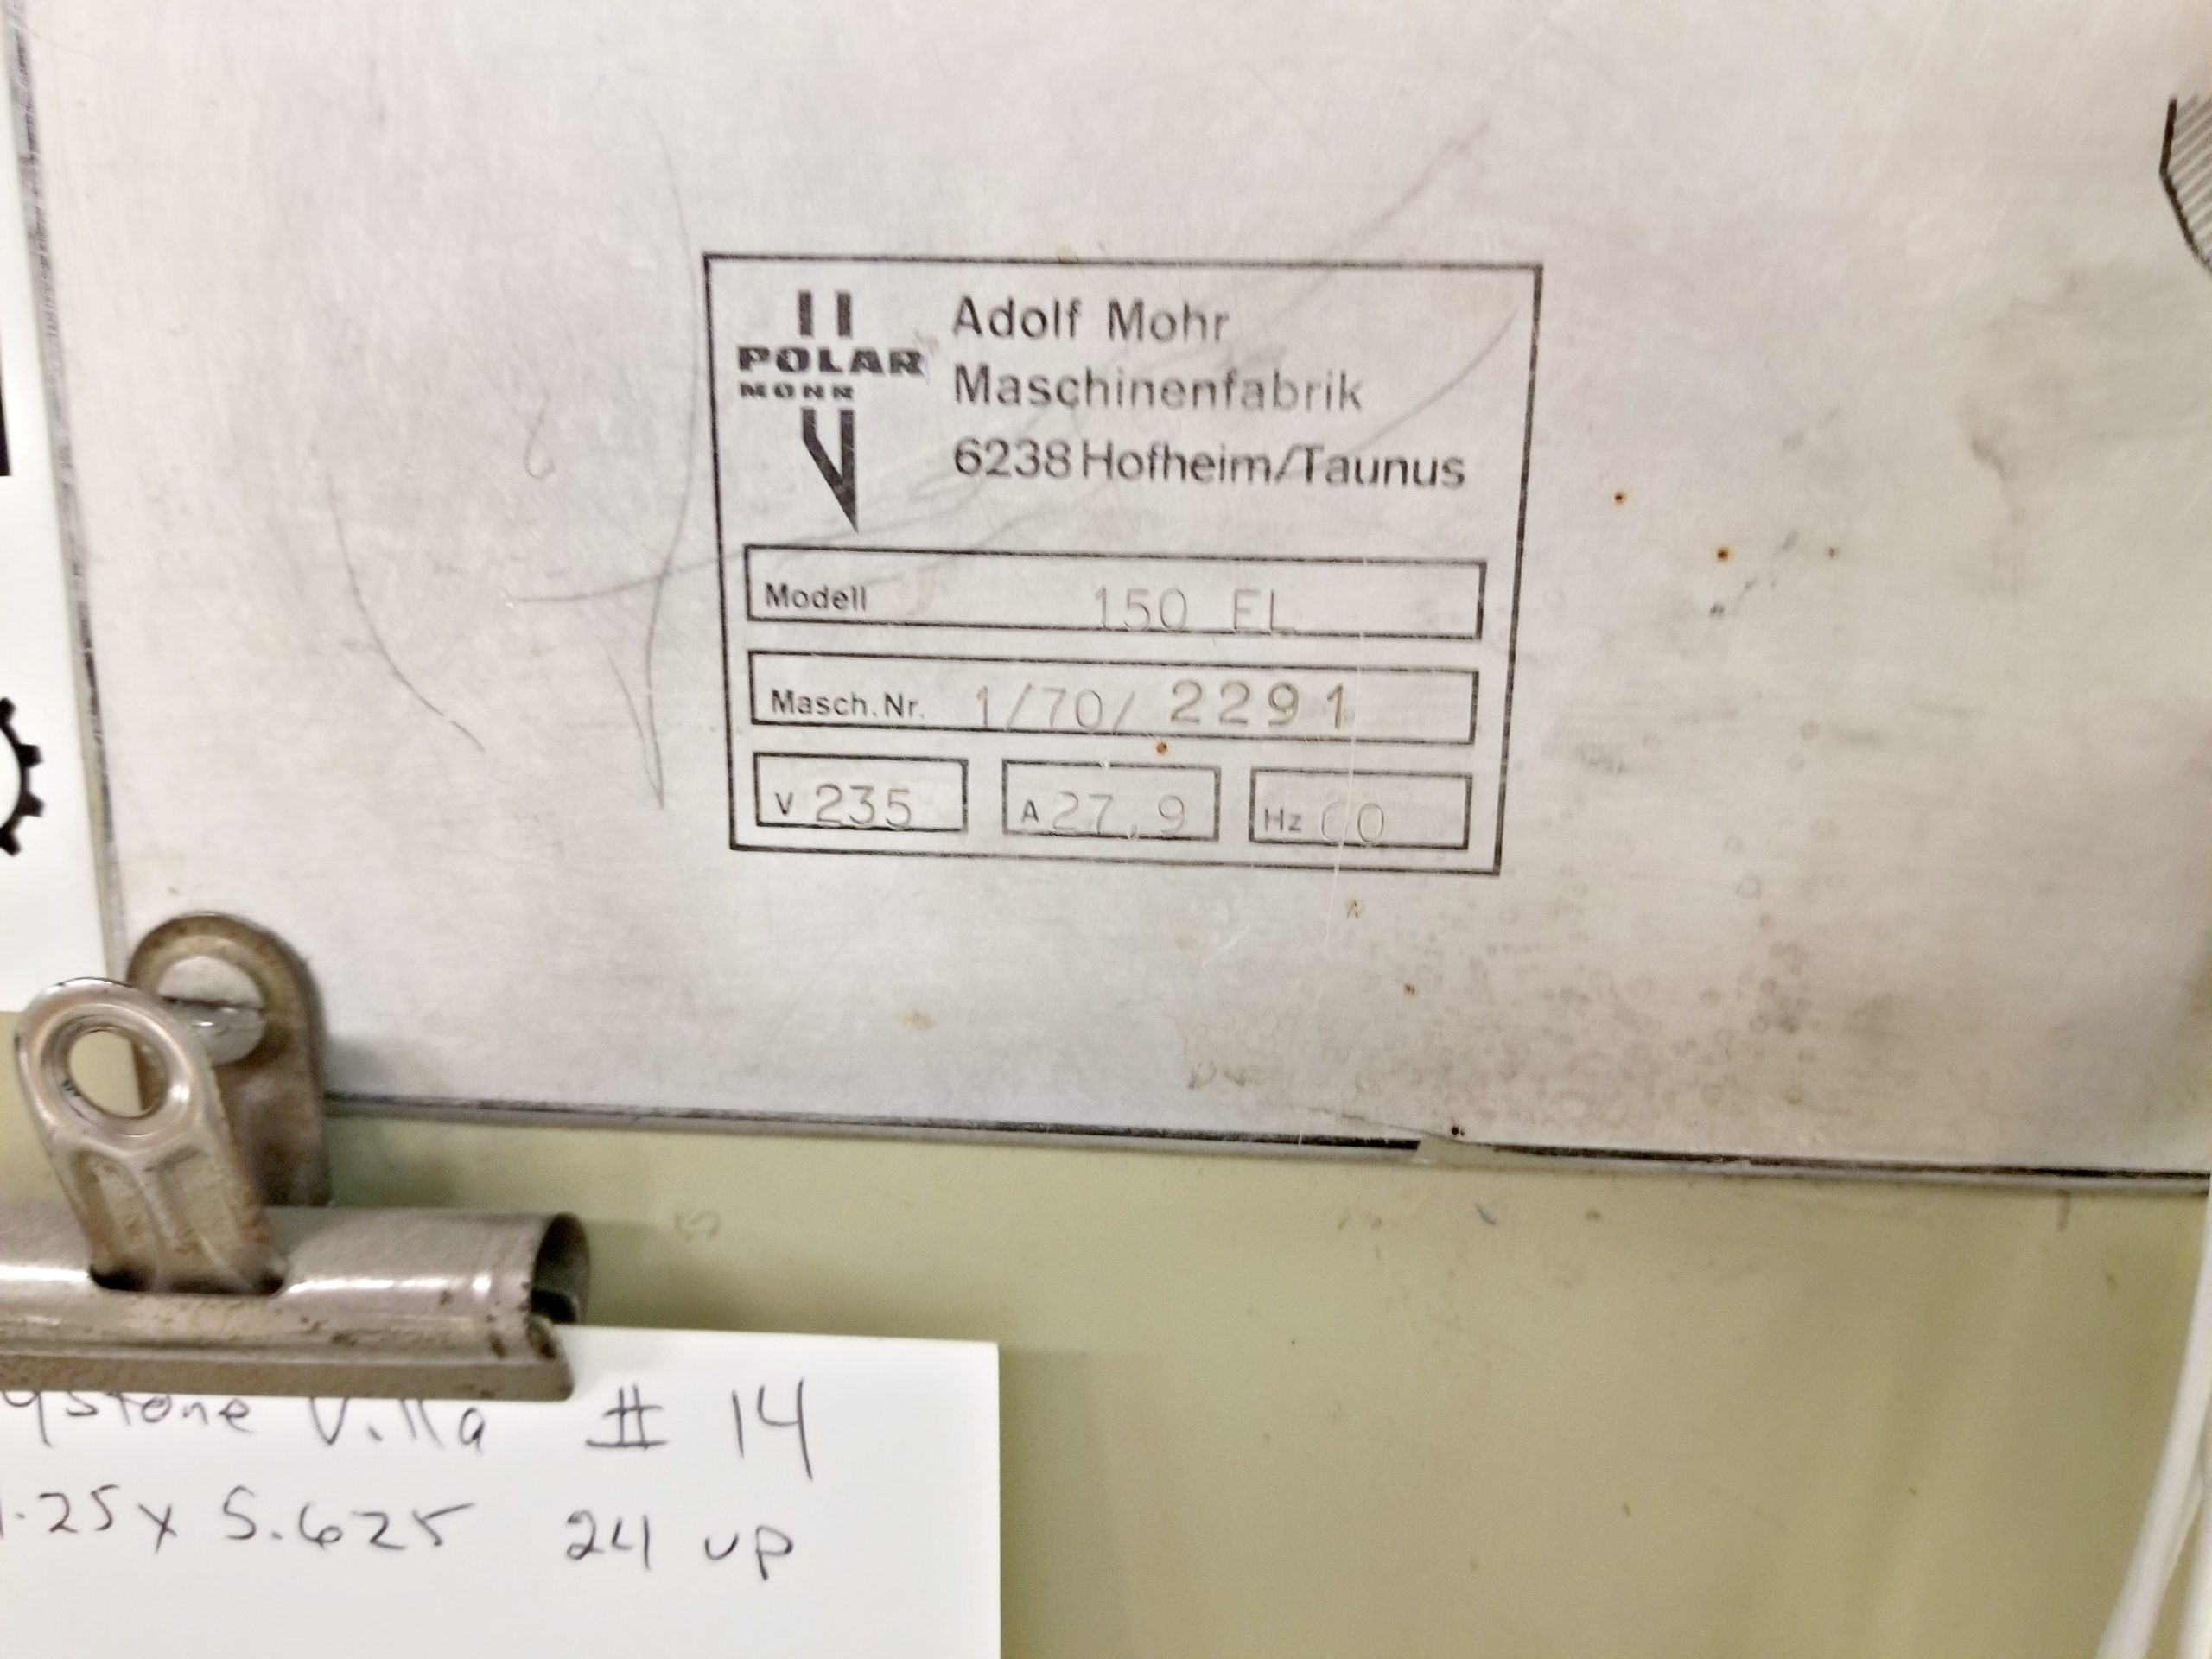 Polar Eltromat 150 Cutter with Microcut (used) Item # UGW-81  (Pennsylvania)